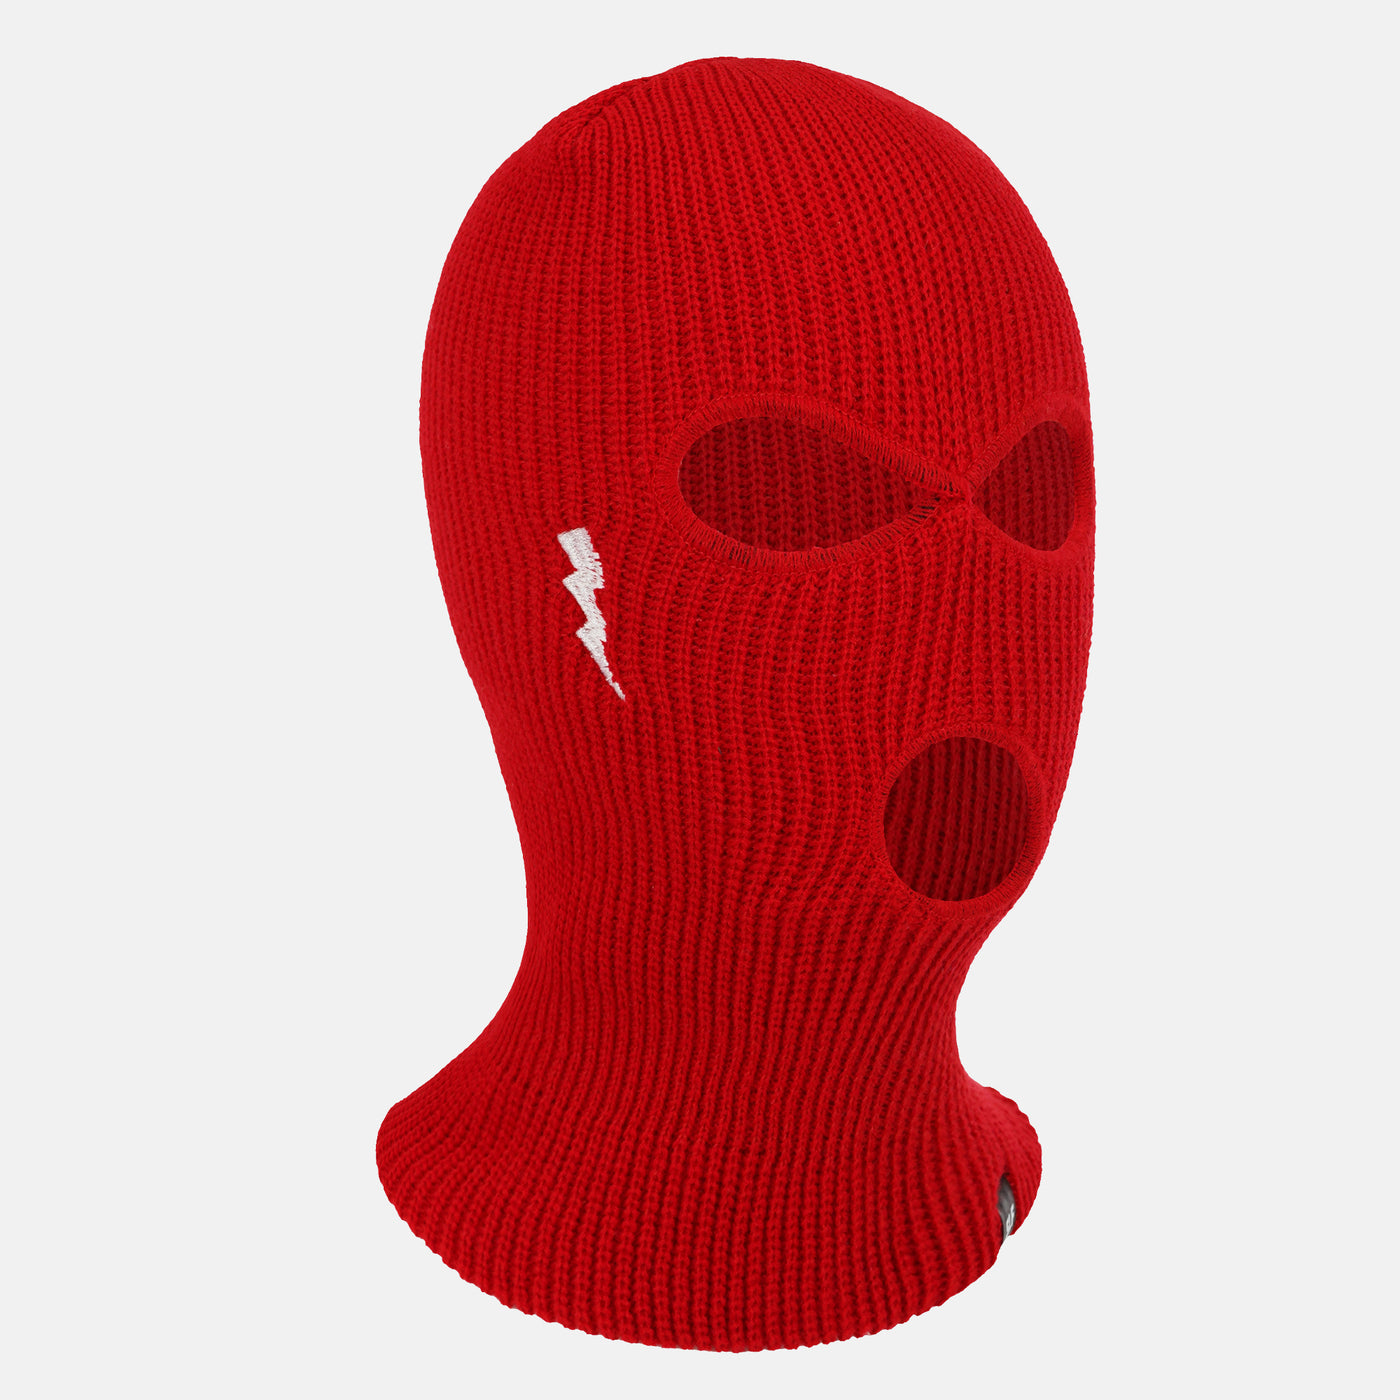 Trueno Red Ski Mask